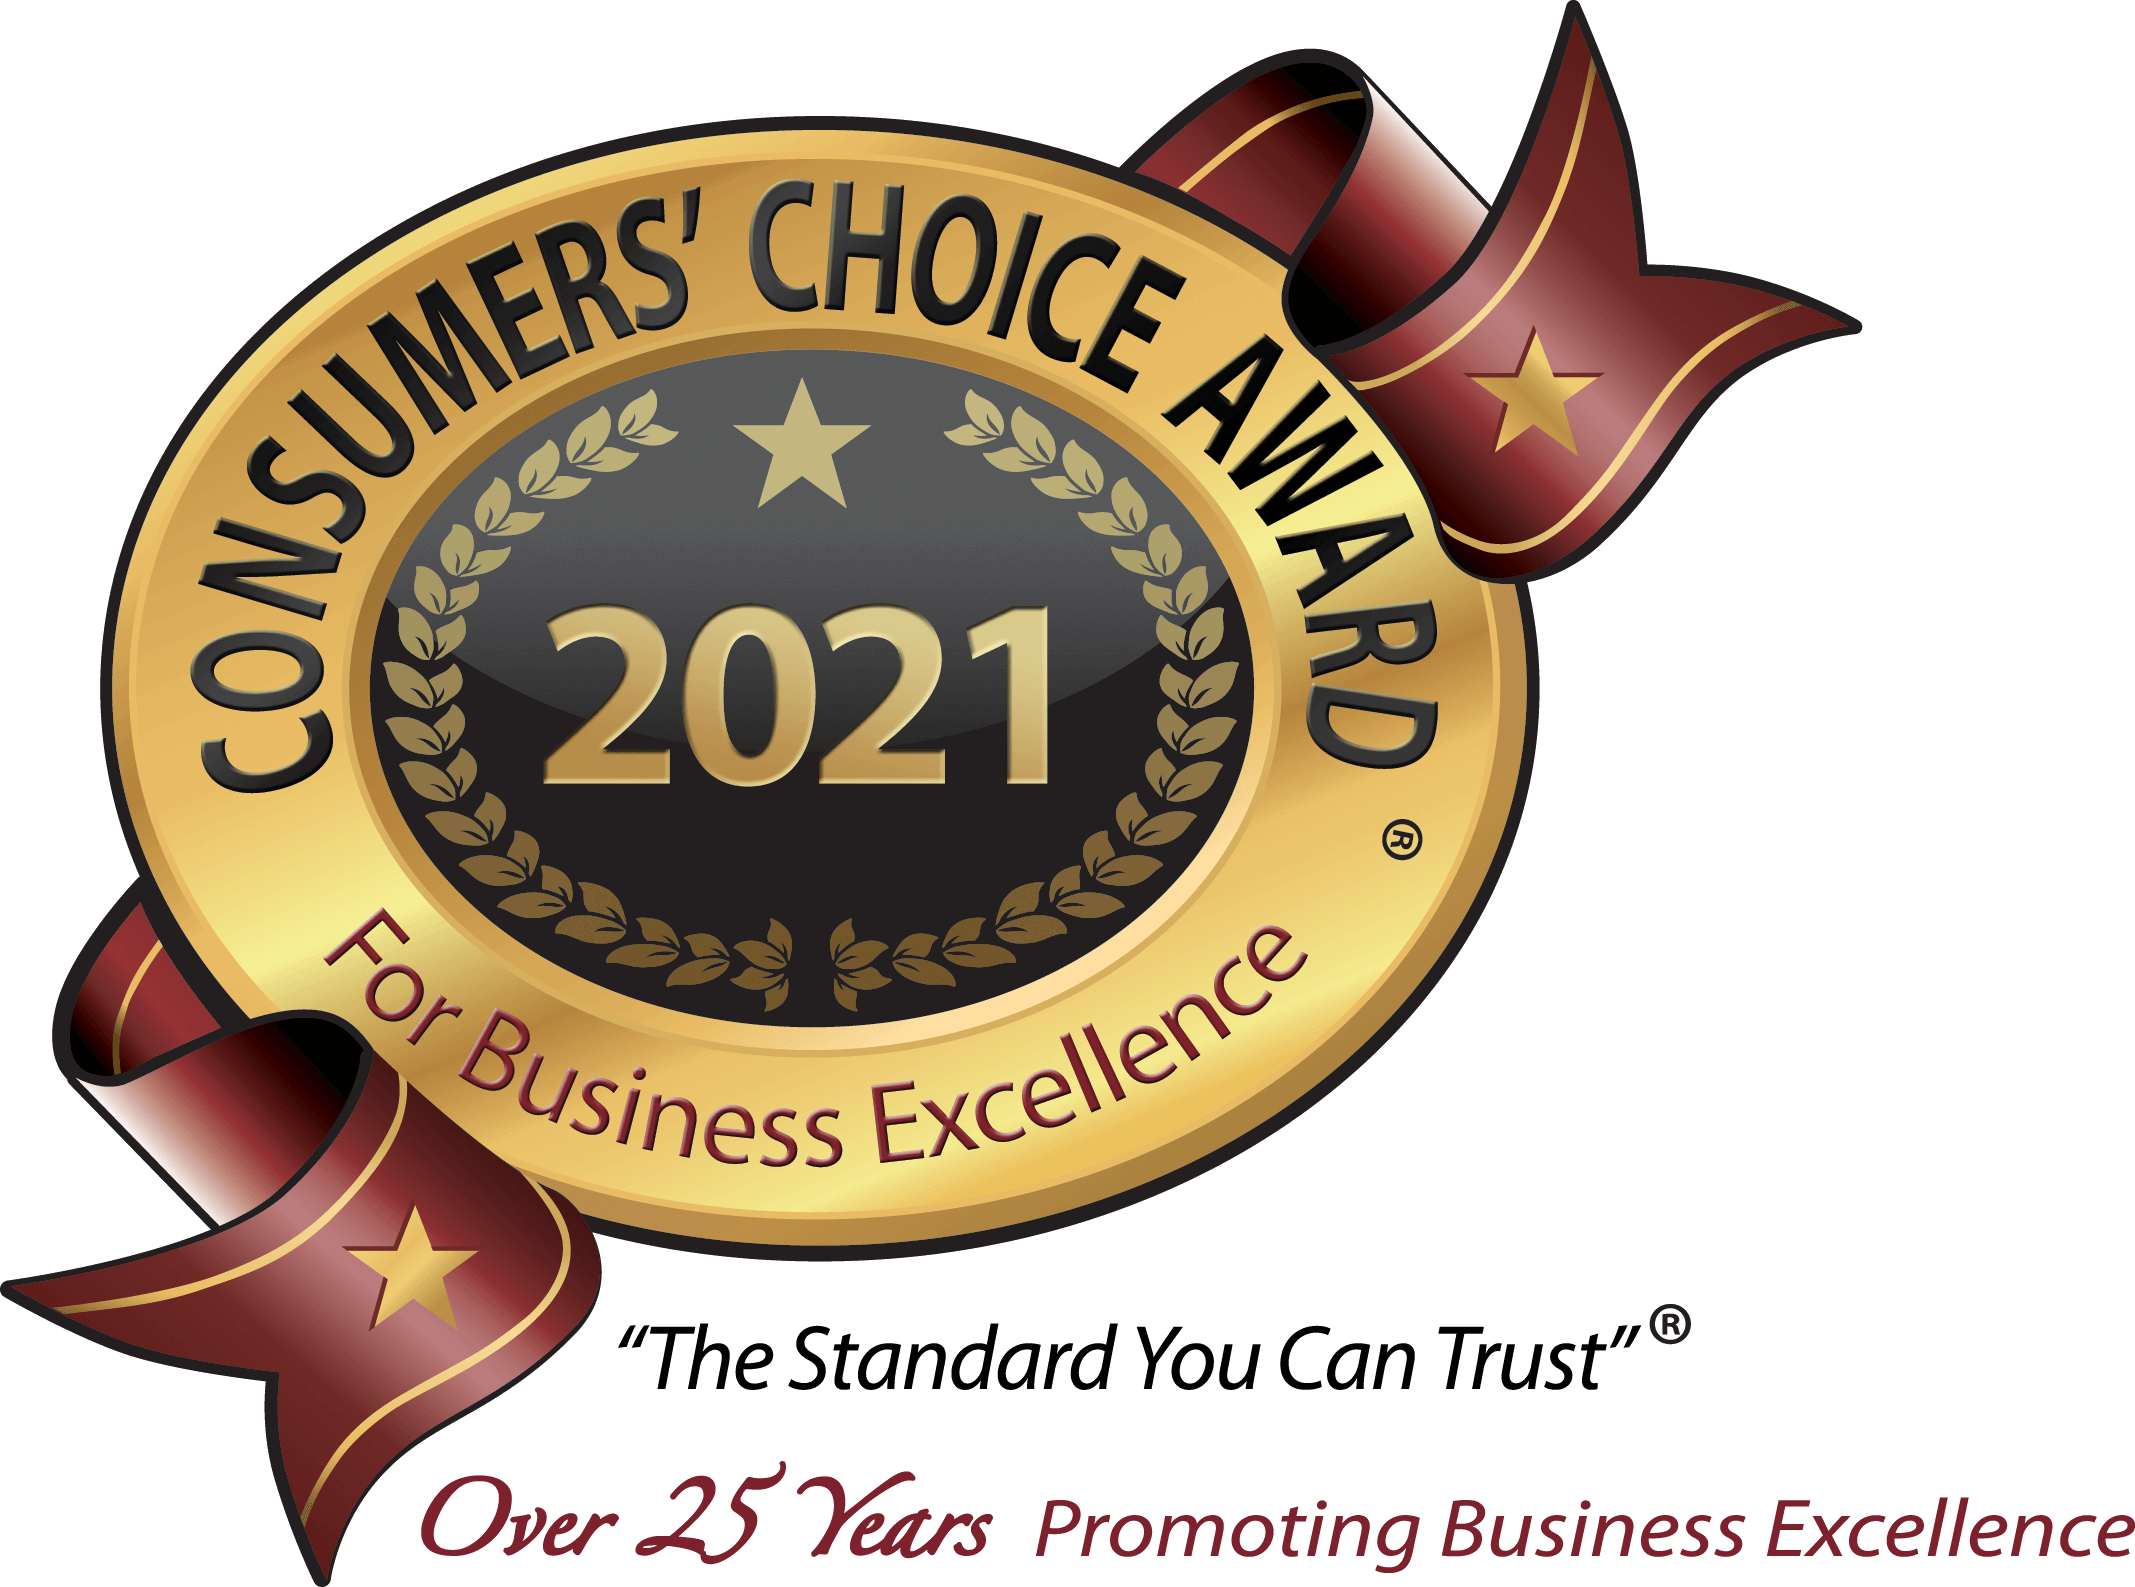 Consumer choice award 2021